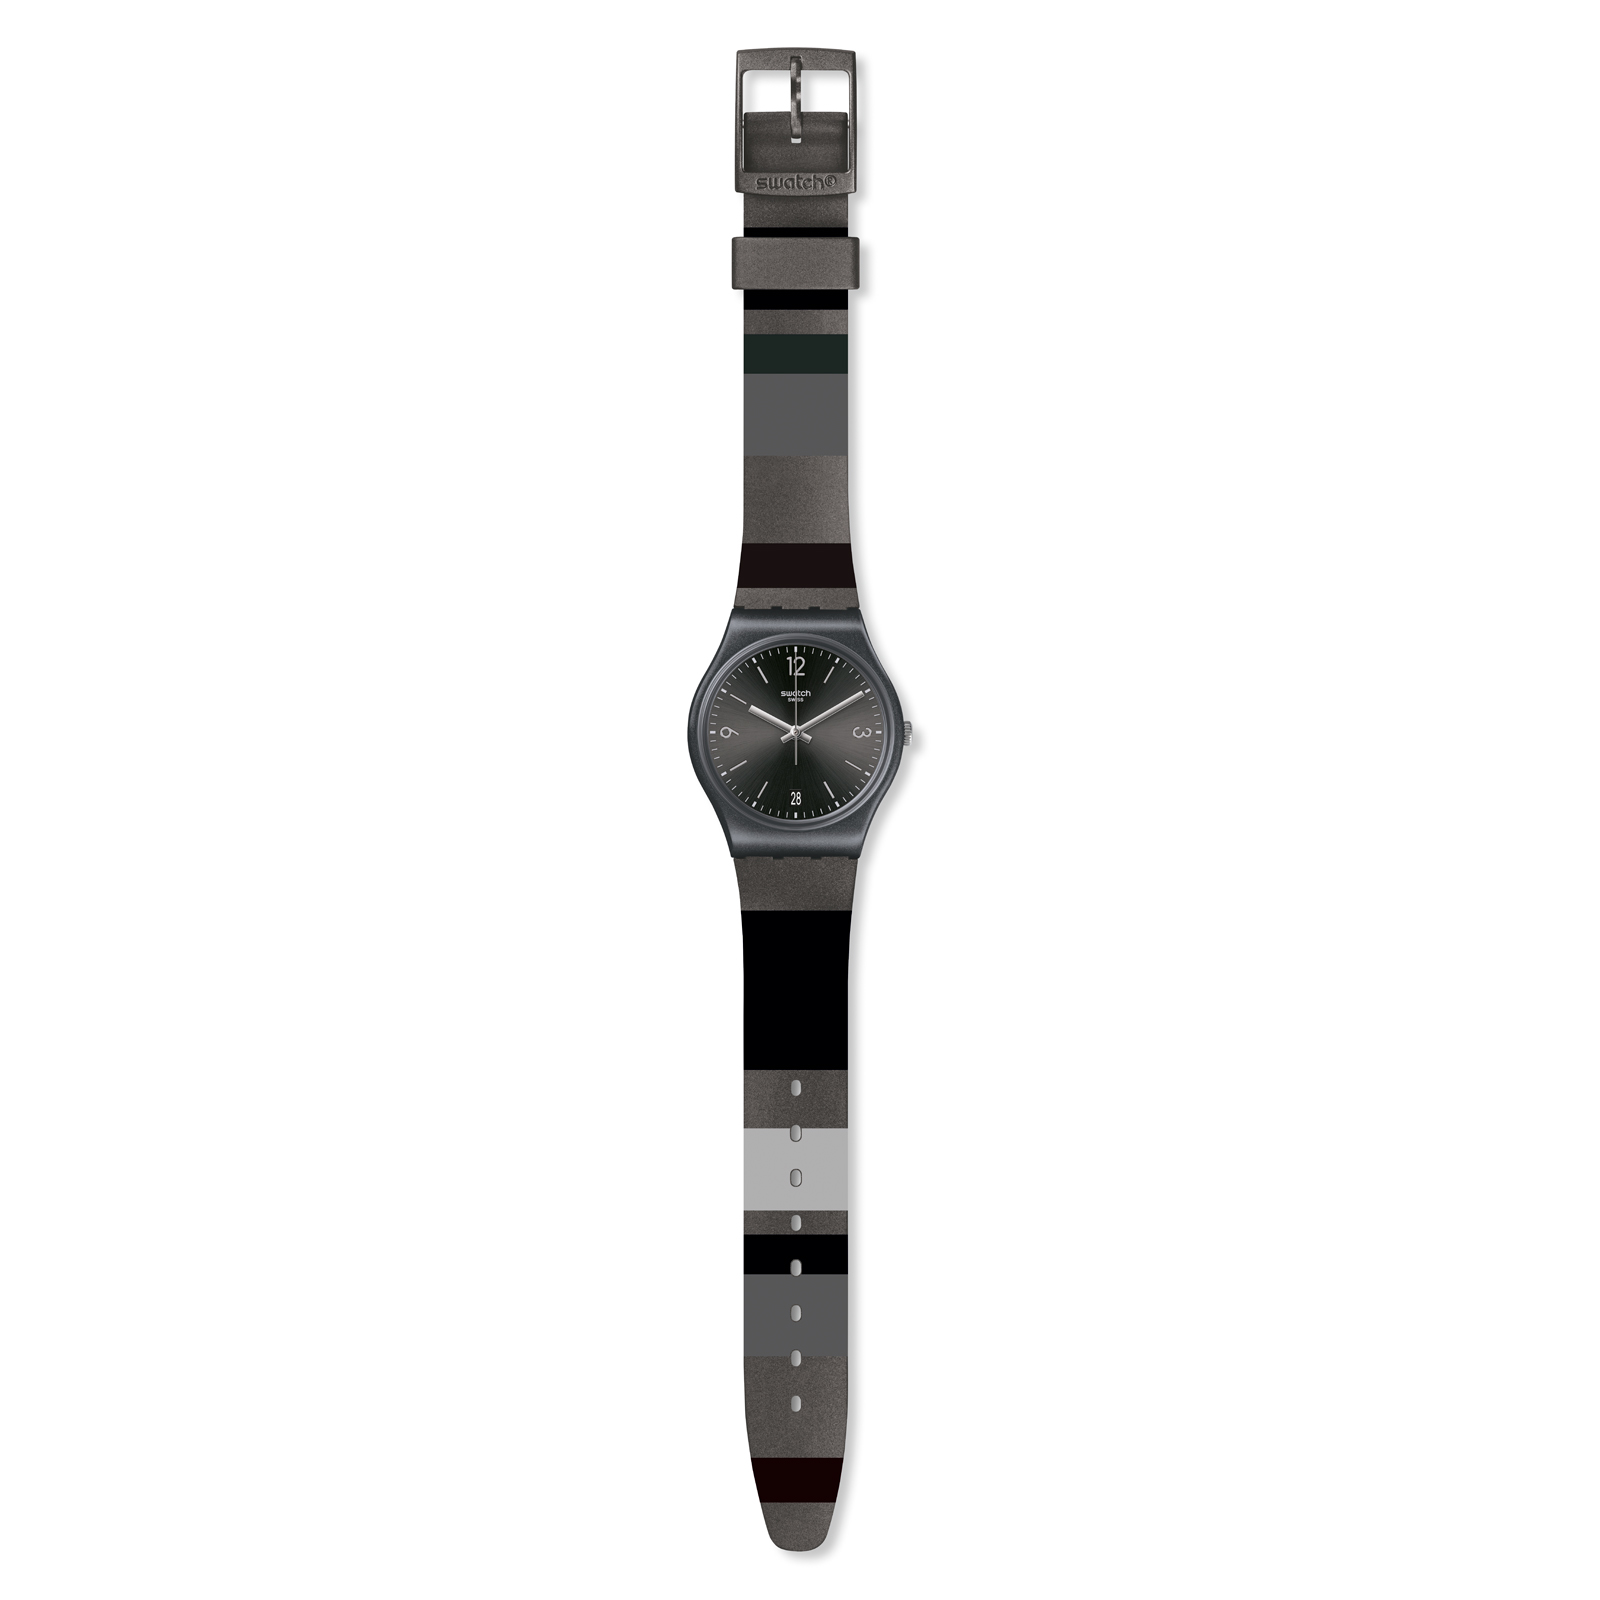 Reloj SWATCH BLACKERALDA GB430 Negro